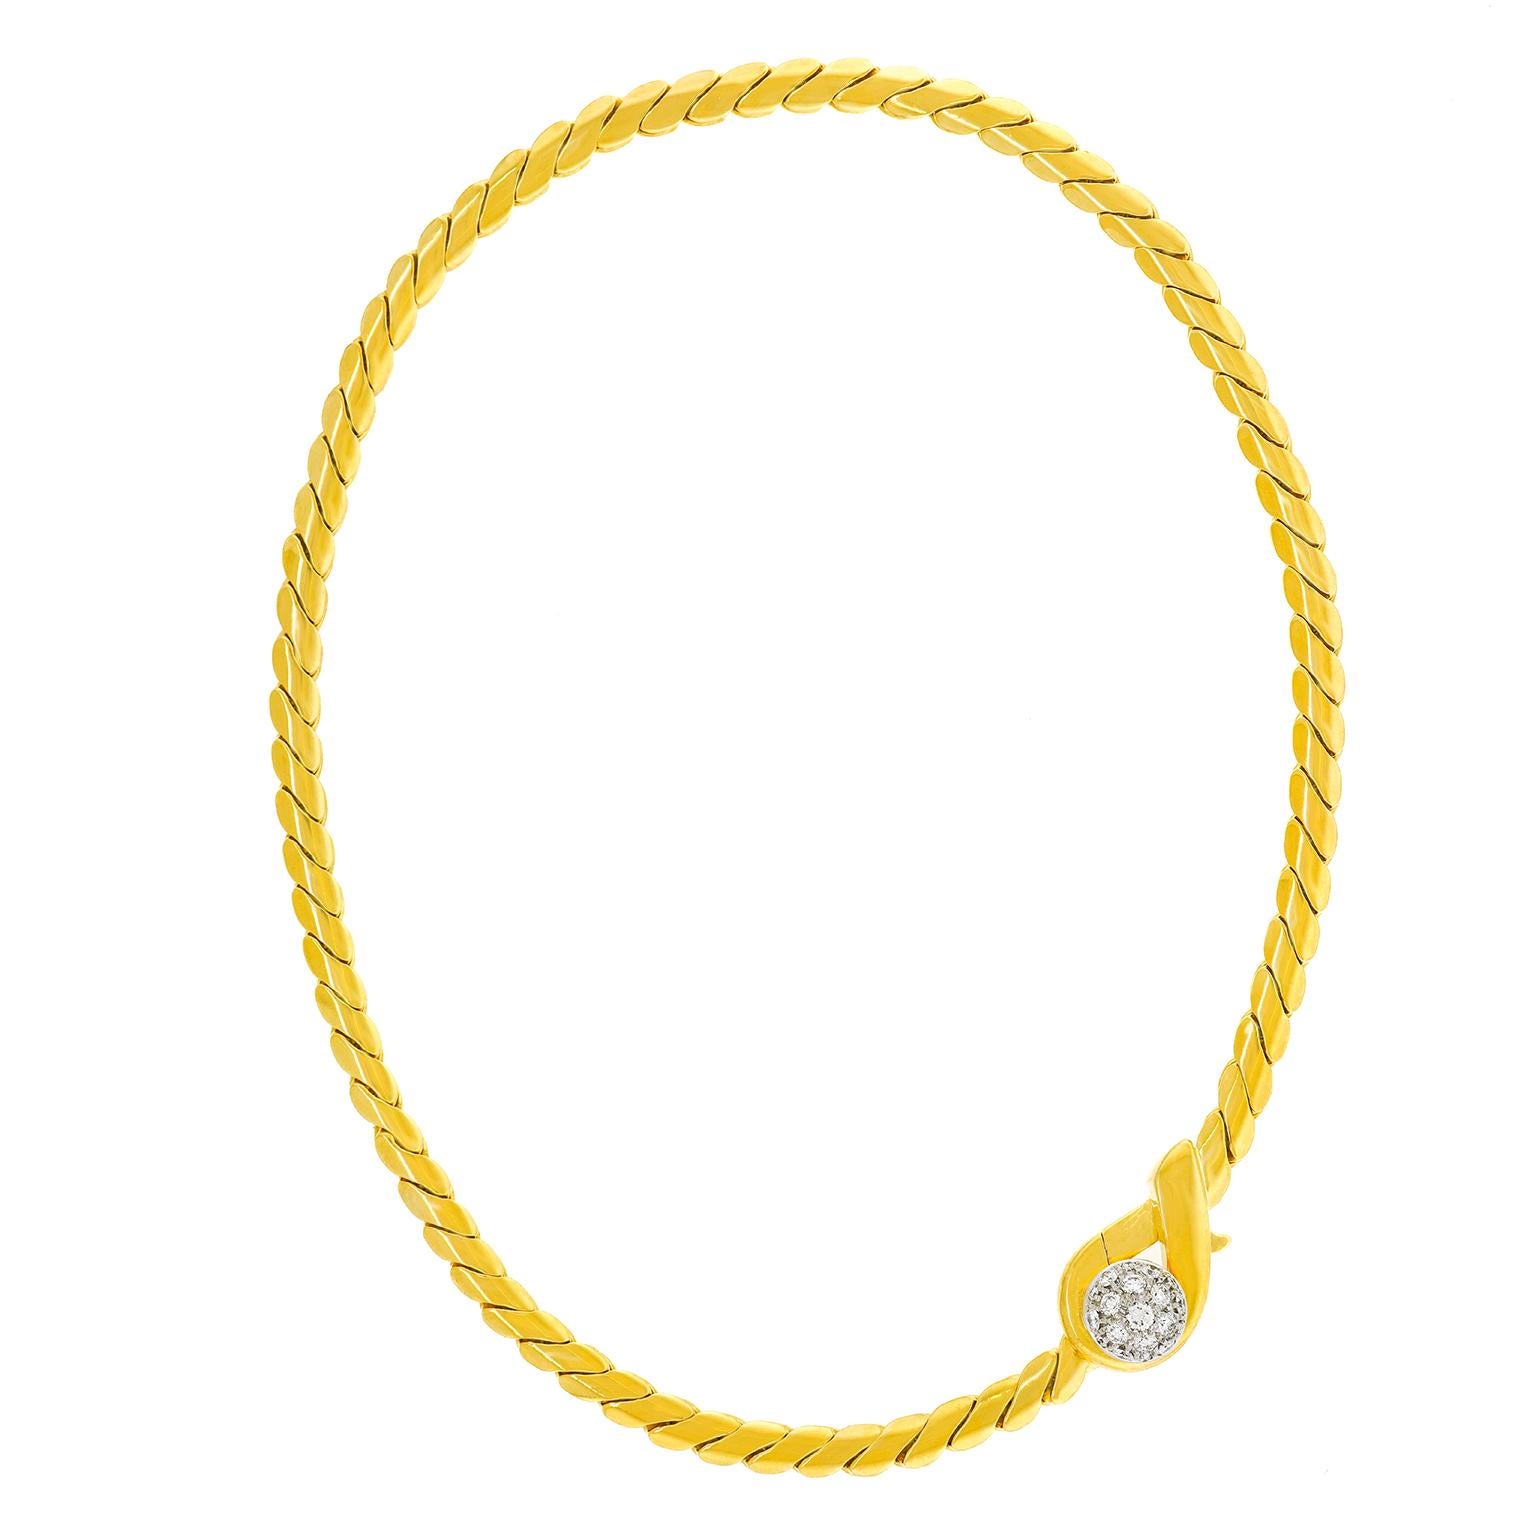 Women's or Men's Pomellato Gold Necklace with Decorative Diamond Catch For Sale